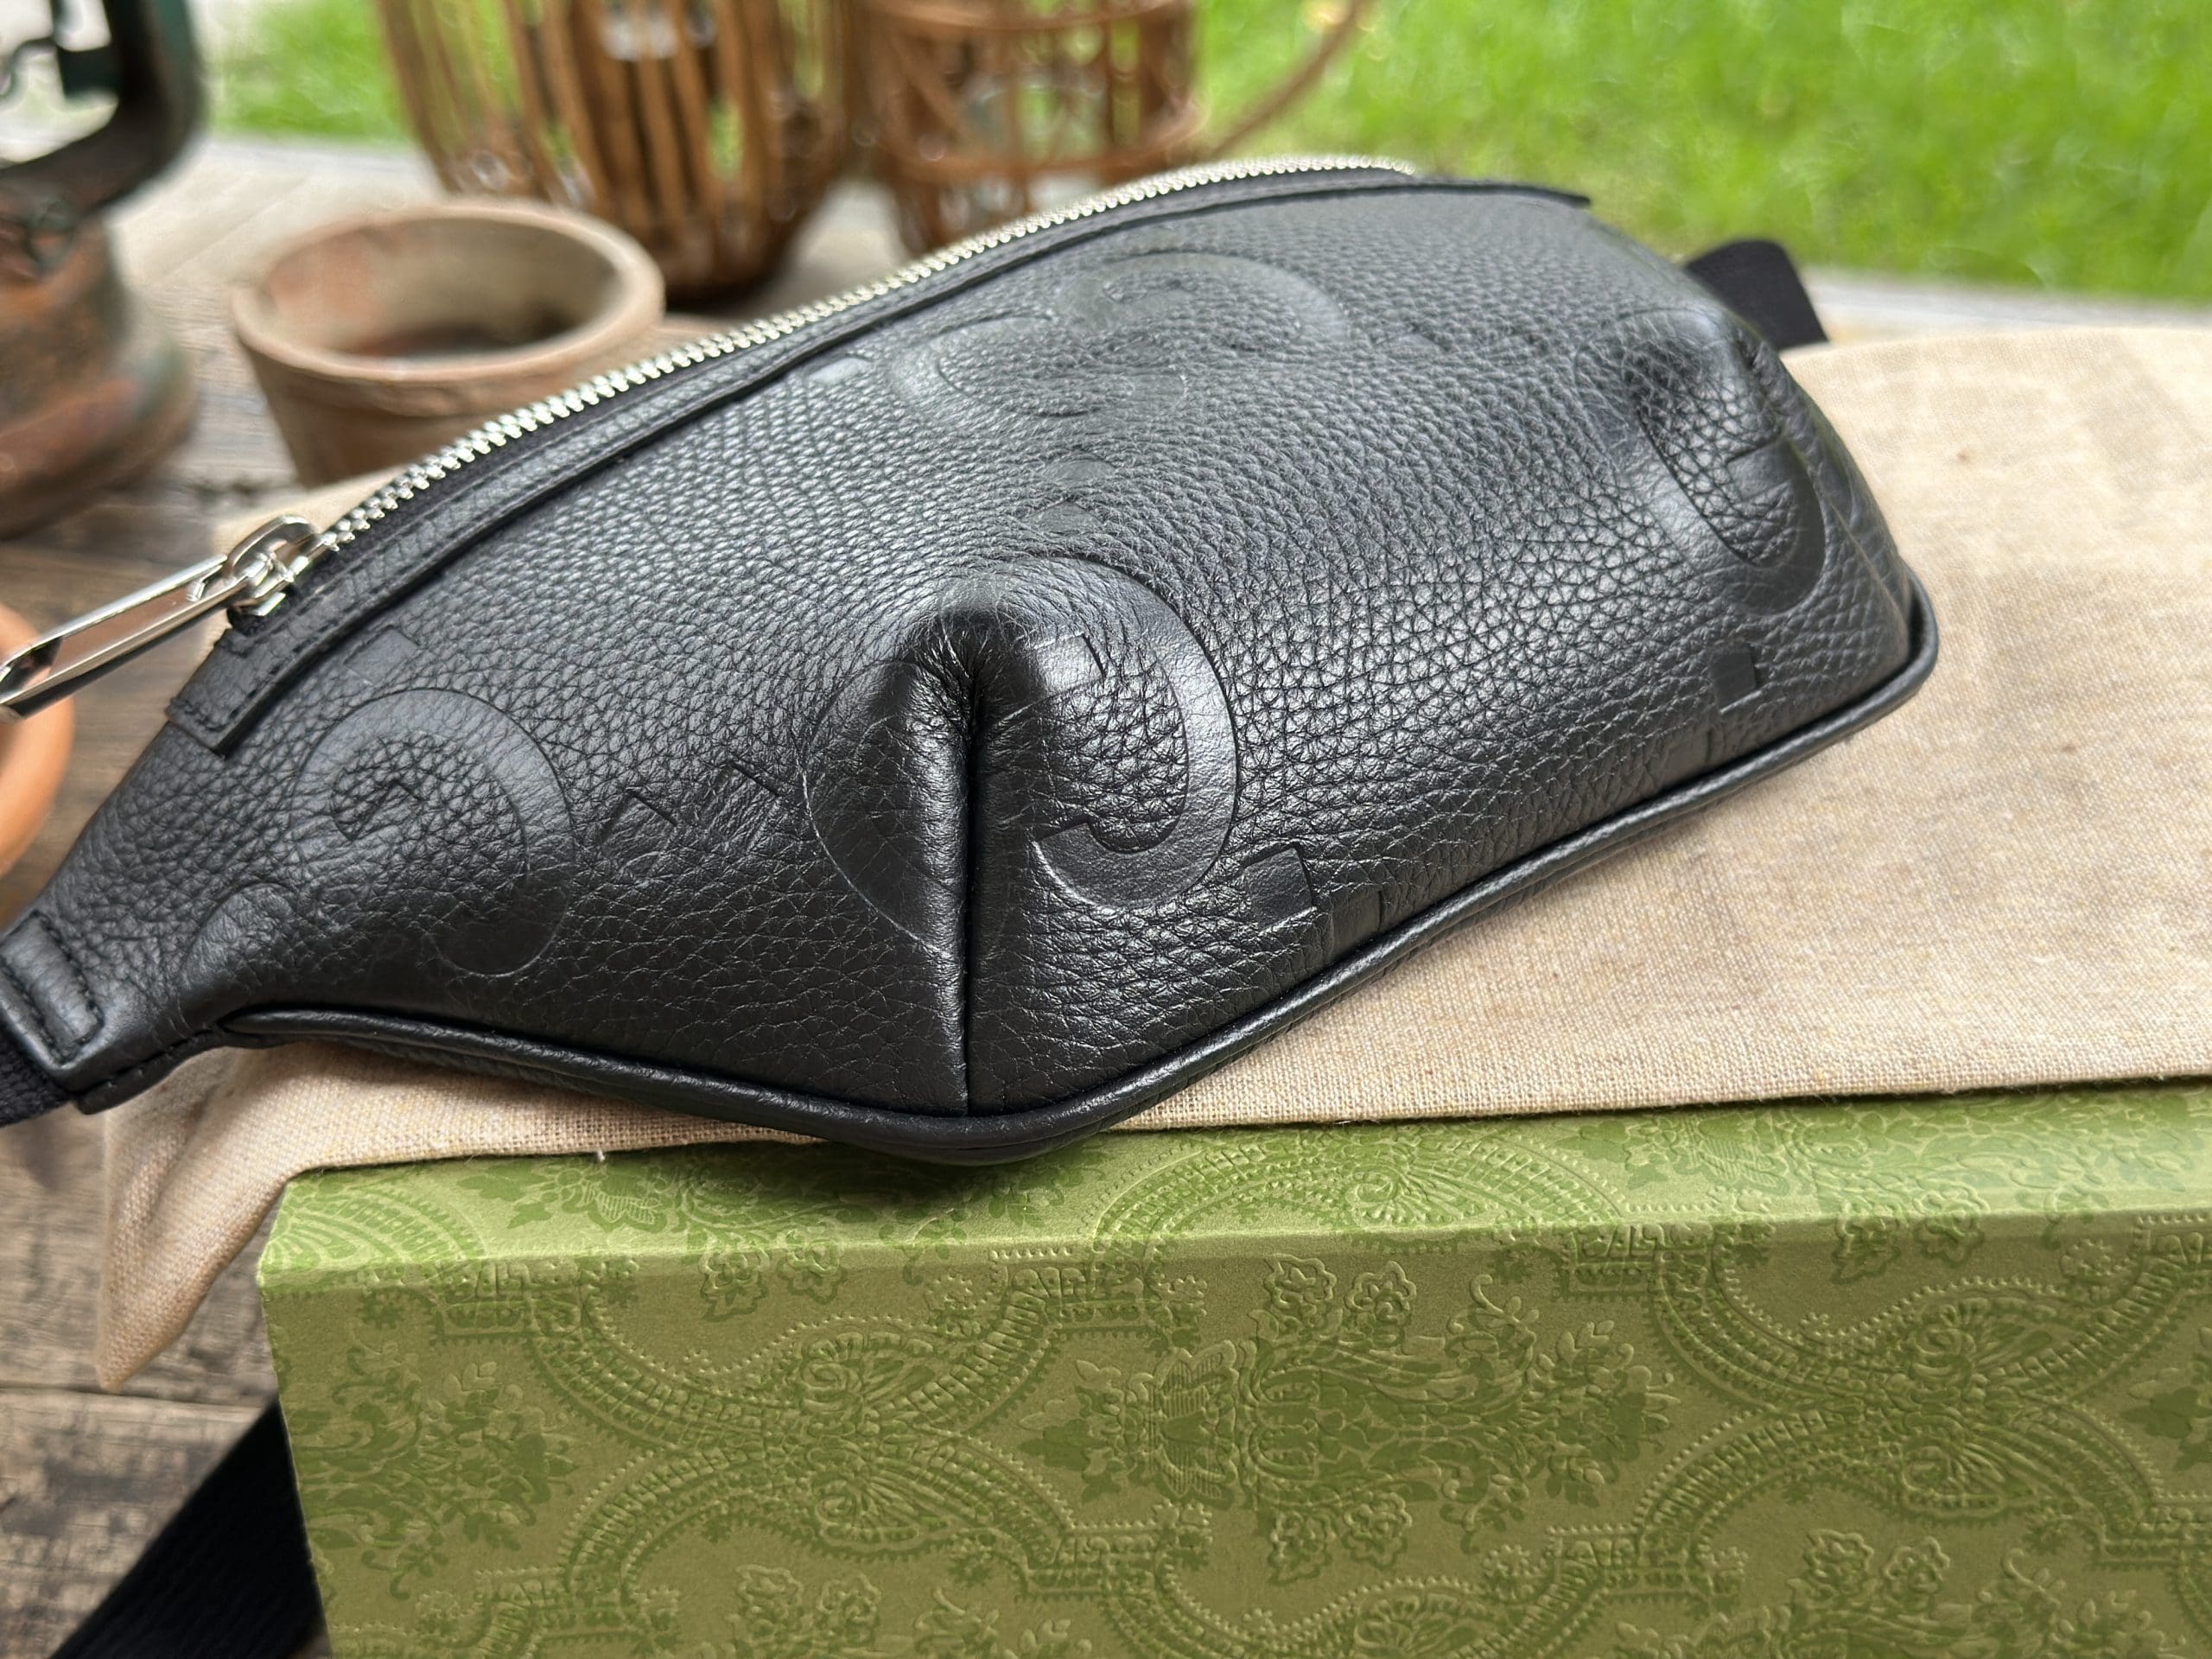 Gucci Small Jumbo GG Leather Belt Bag - Farfetch